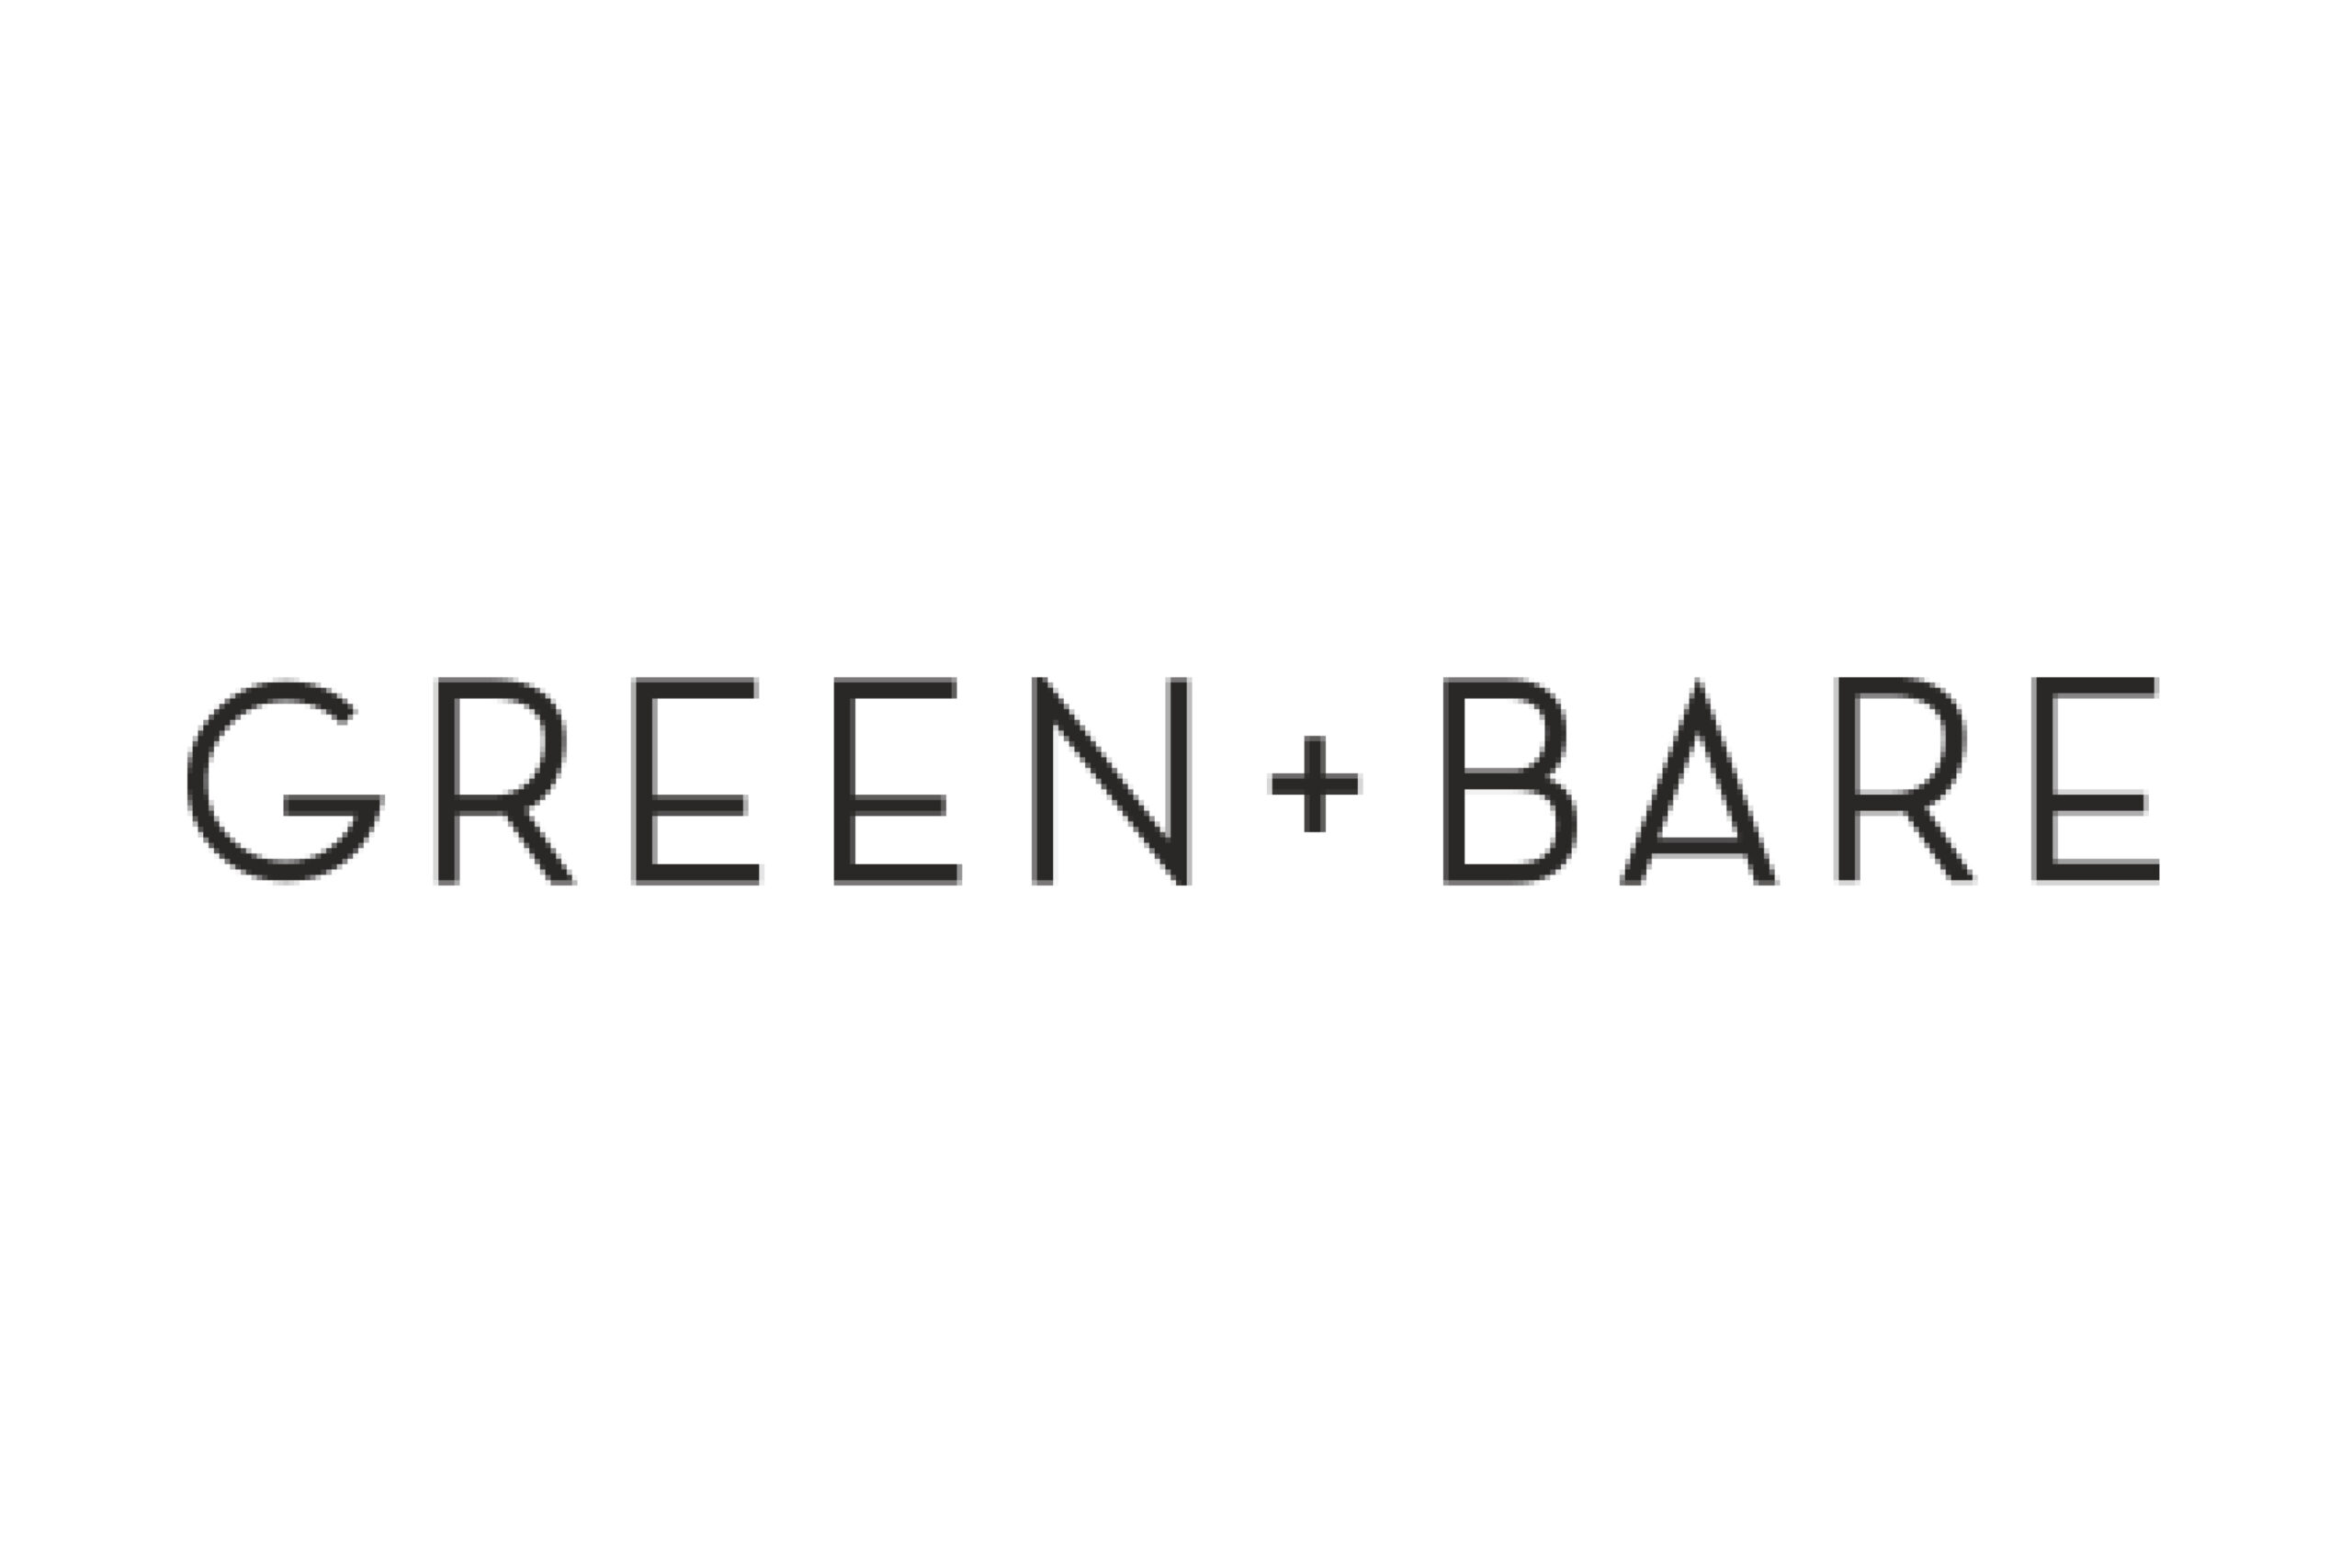 Green + Bare